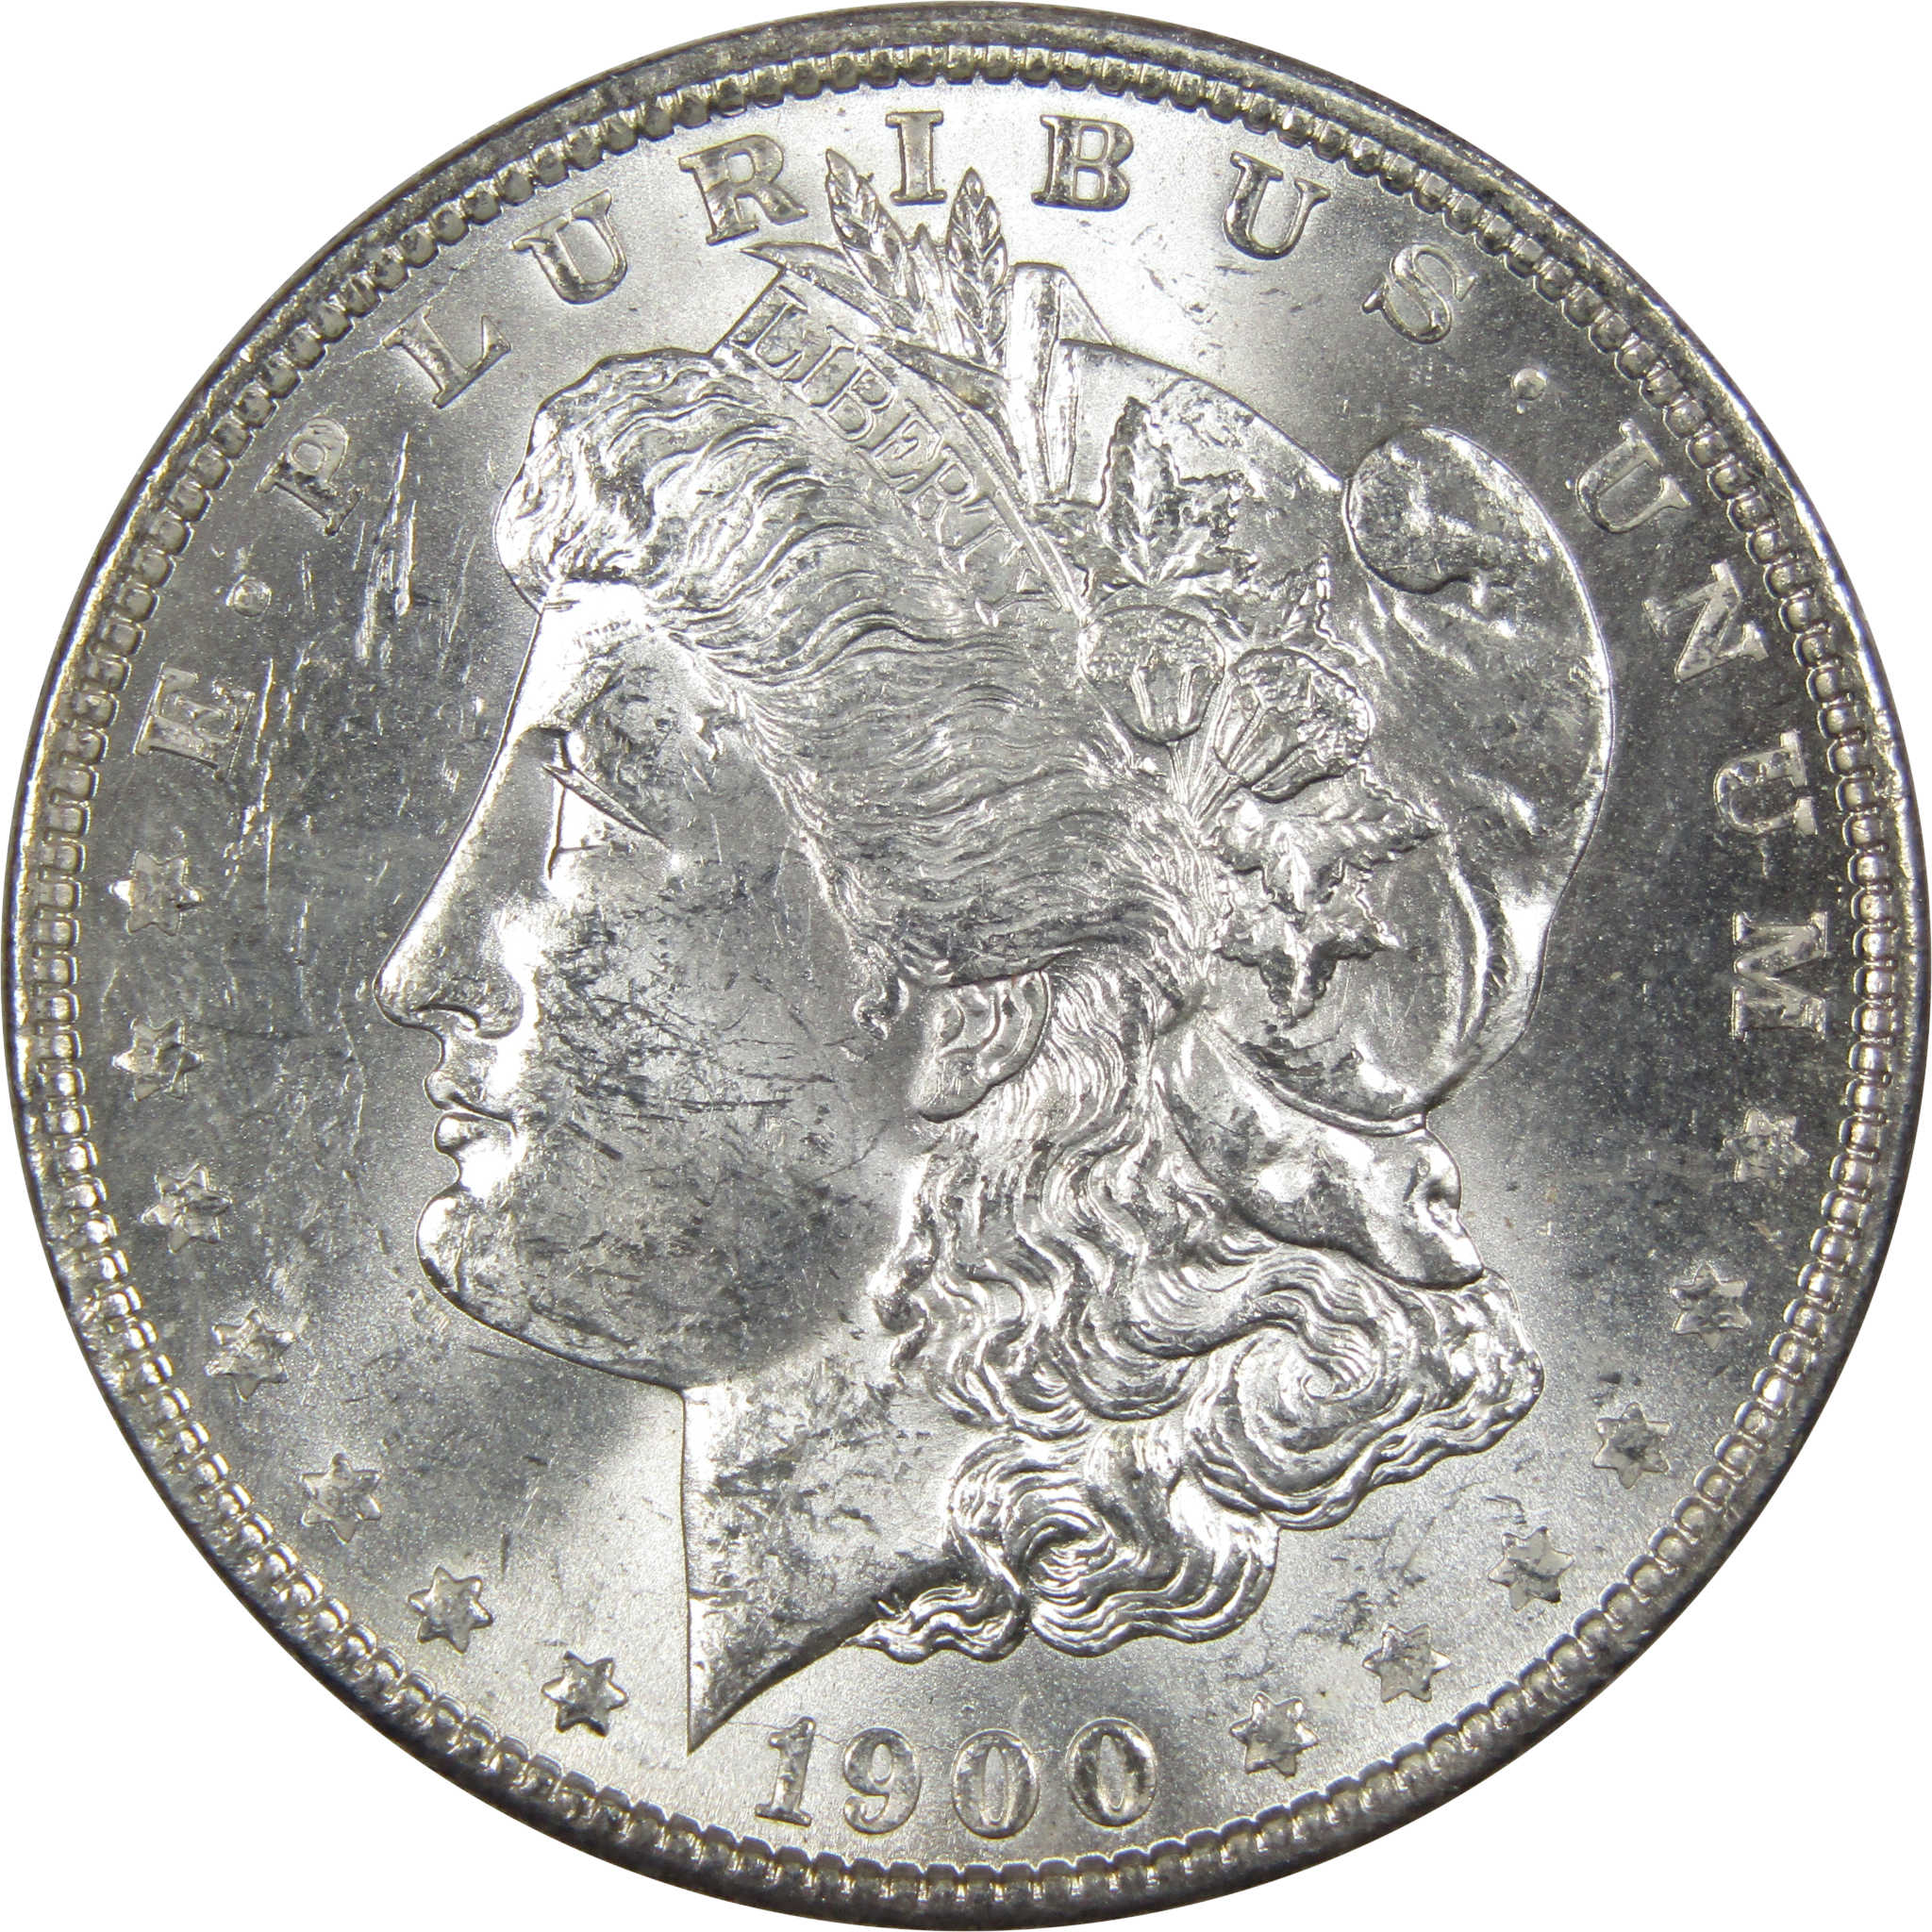 1900 O Morgan Dollar BU Uncirculated Mint State 90% Silver SKU:IPC9785 - Morgan coin - Morgan silver dollar - Morgan silver dollar for sale - Profile Coins &amp; Collectibles